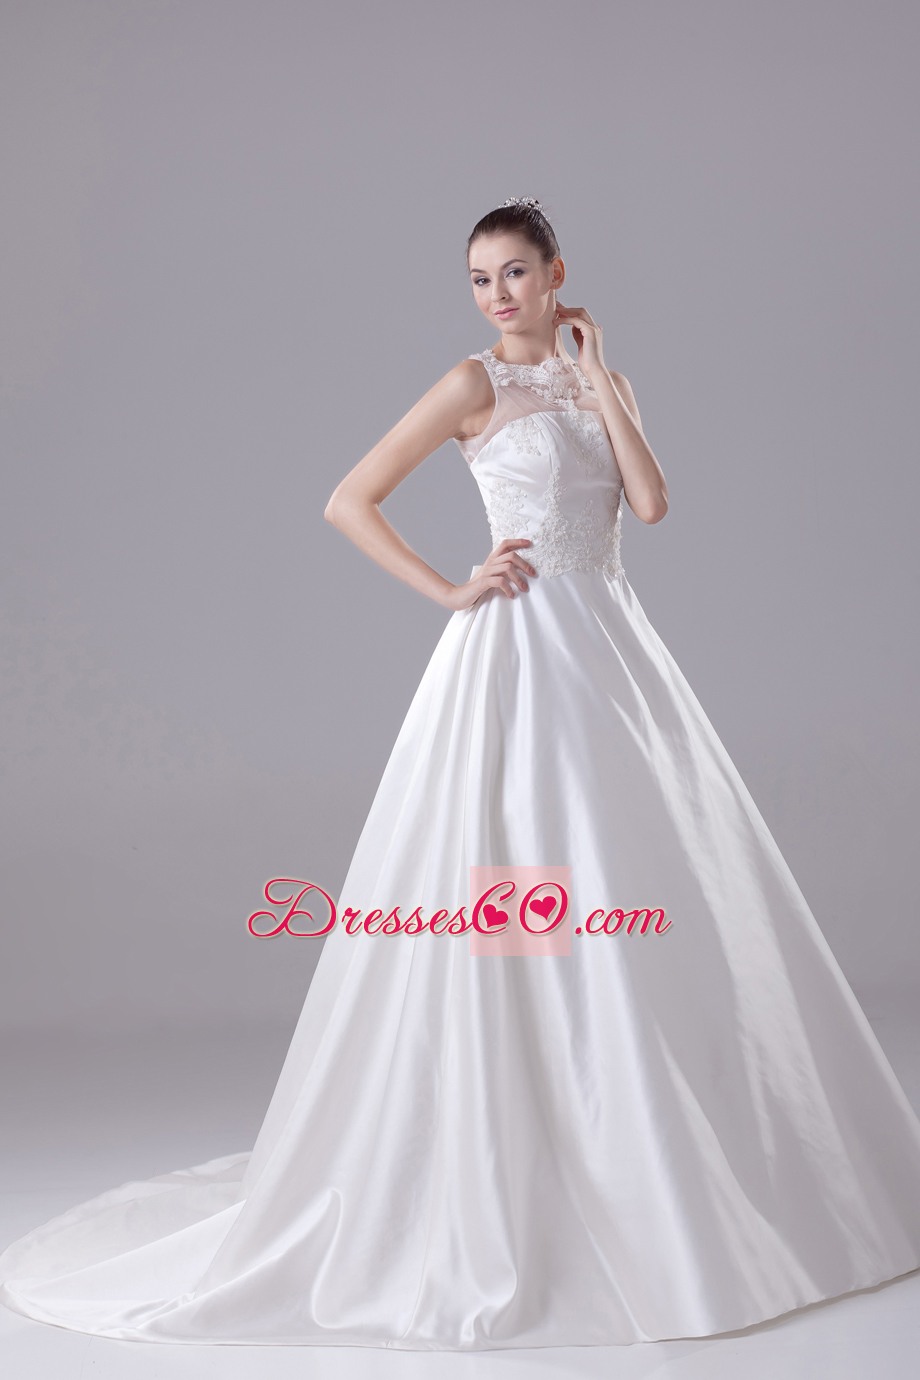 Bateau Neck New A-line / Princess Lace Wedding Dress